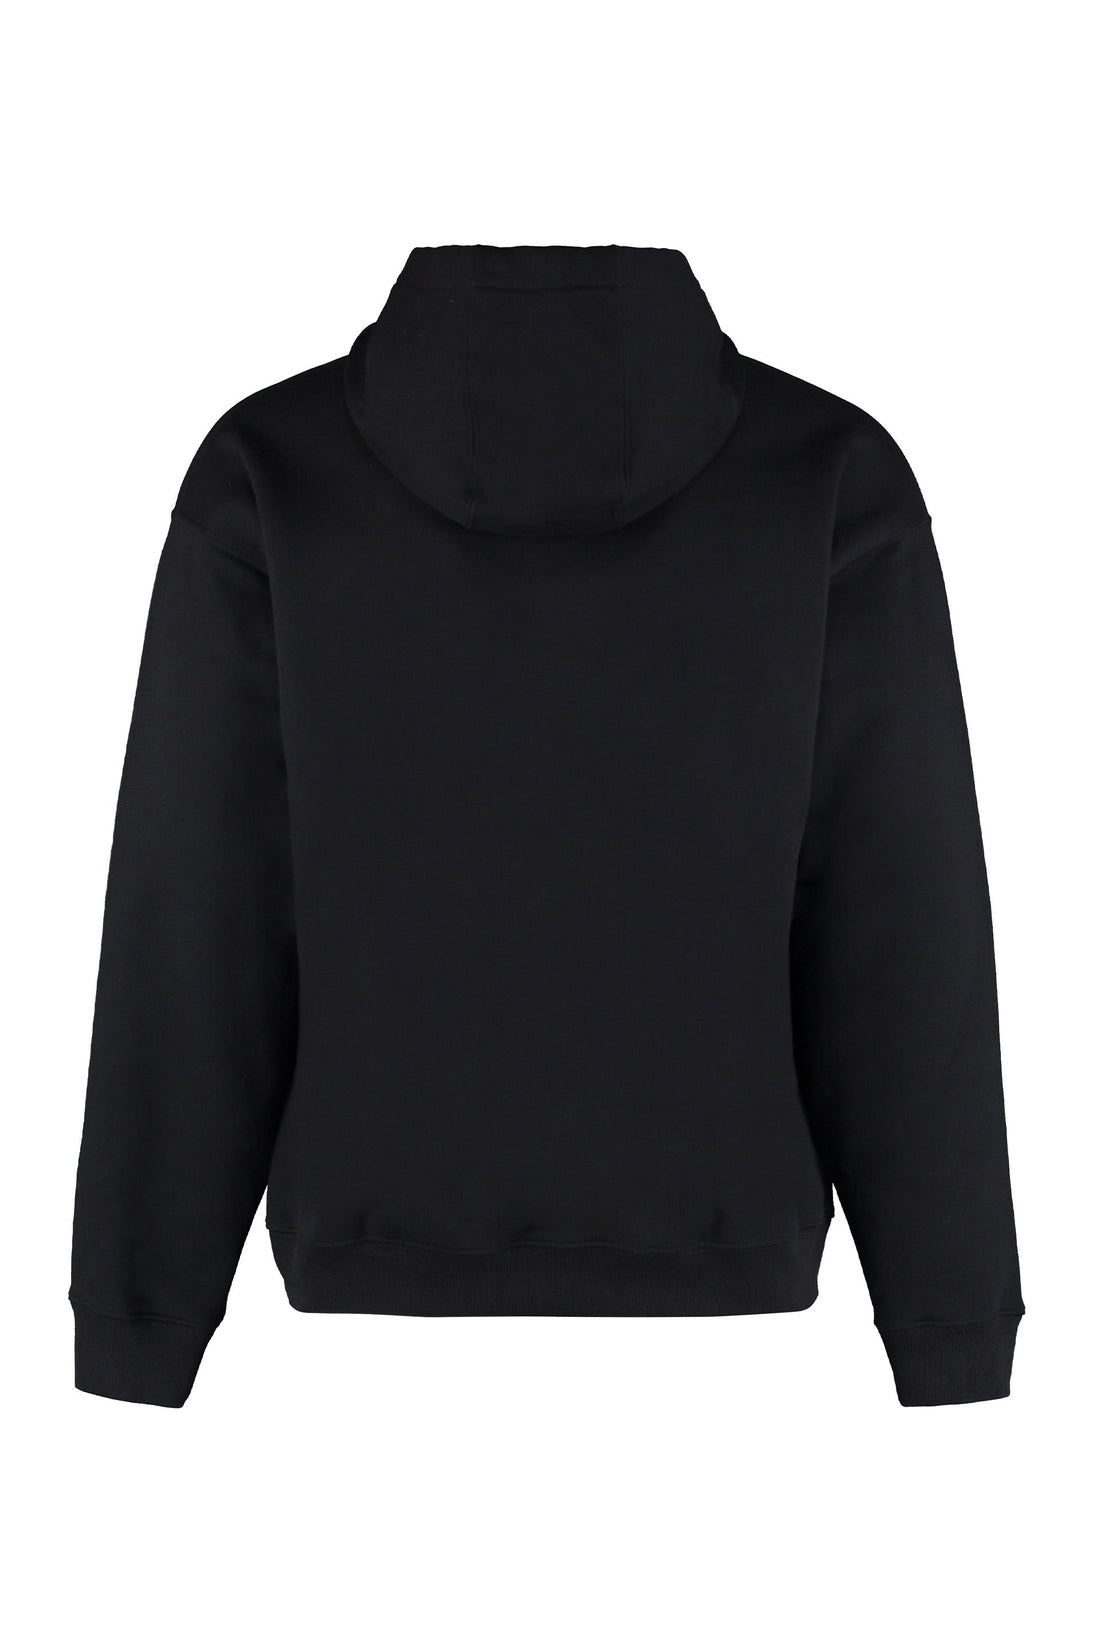 Versace-OUTLET-SALE-Hooded sweatshirt-ARCHIVIST